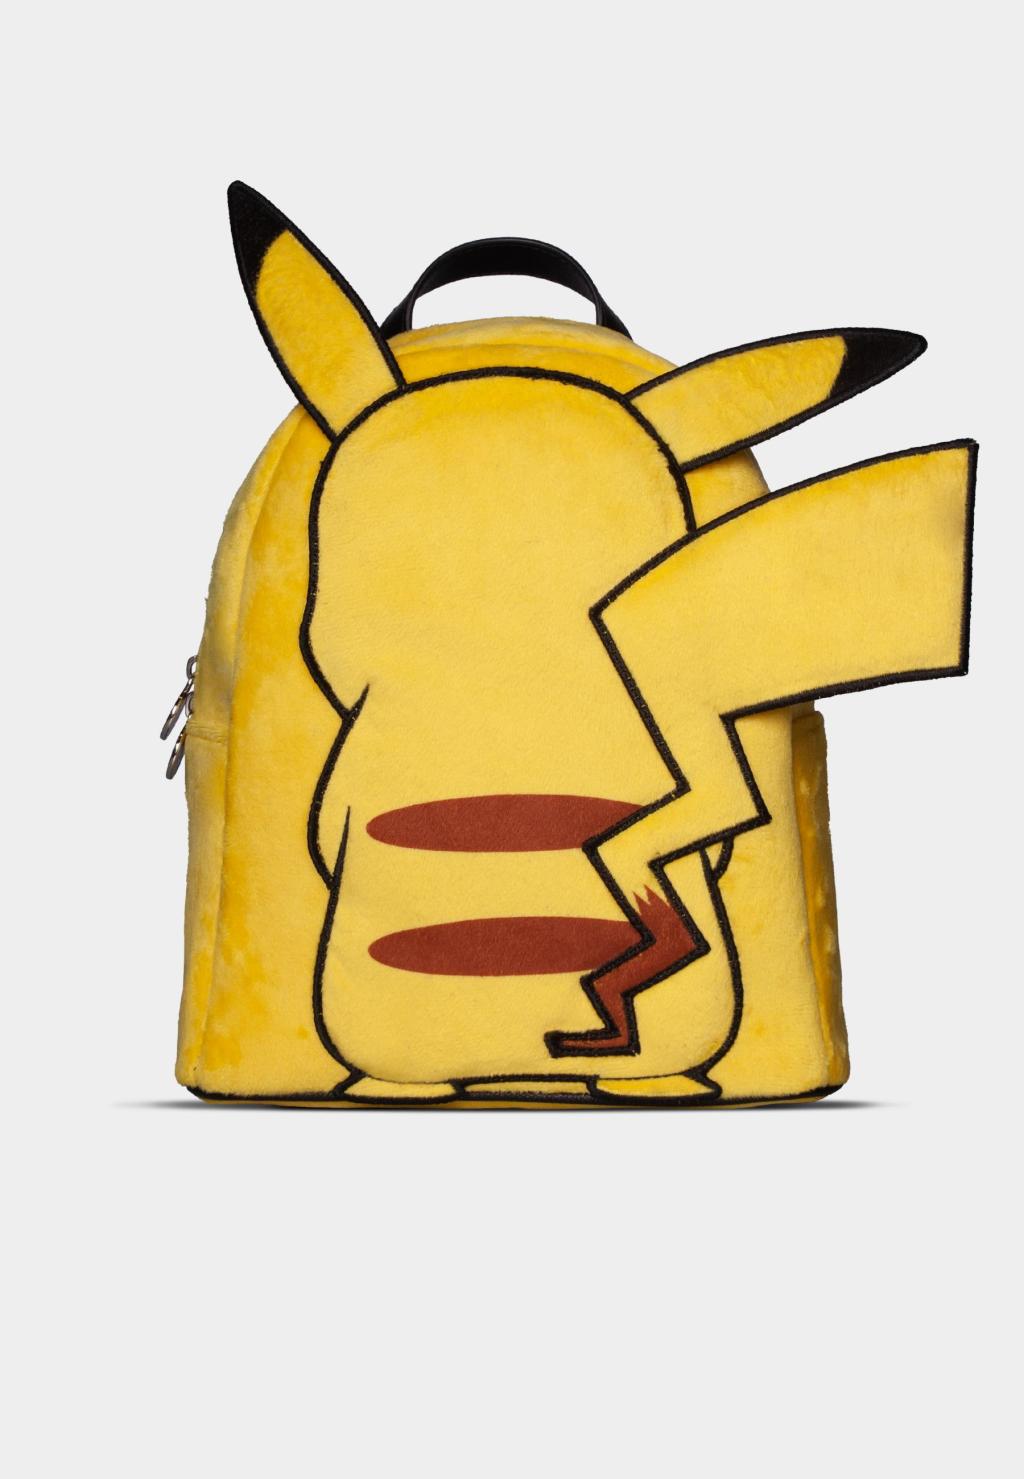 POKEMON - Pikachu - Body - Backpack Novelty '26x20x12cm'